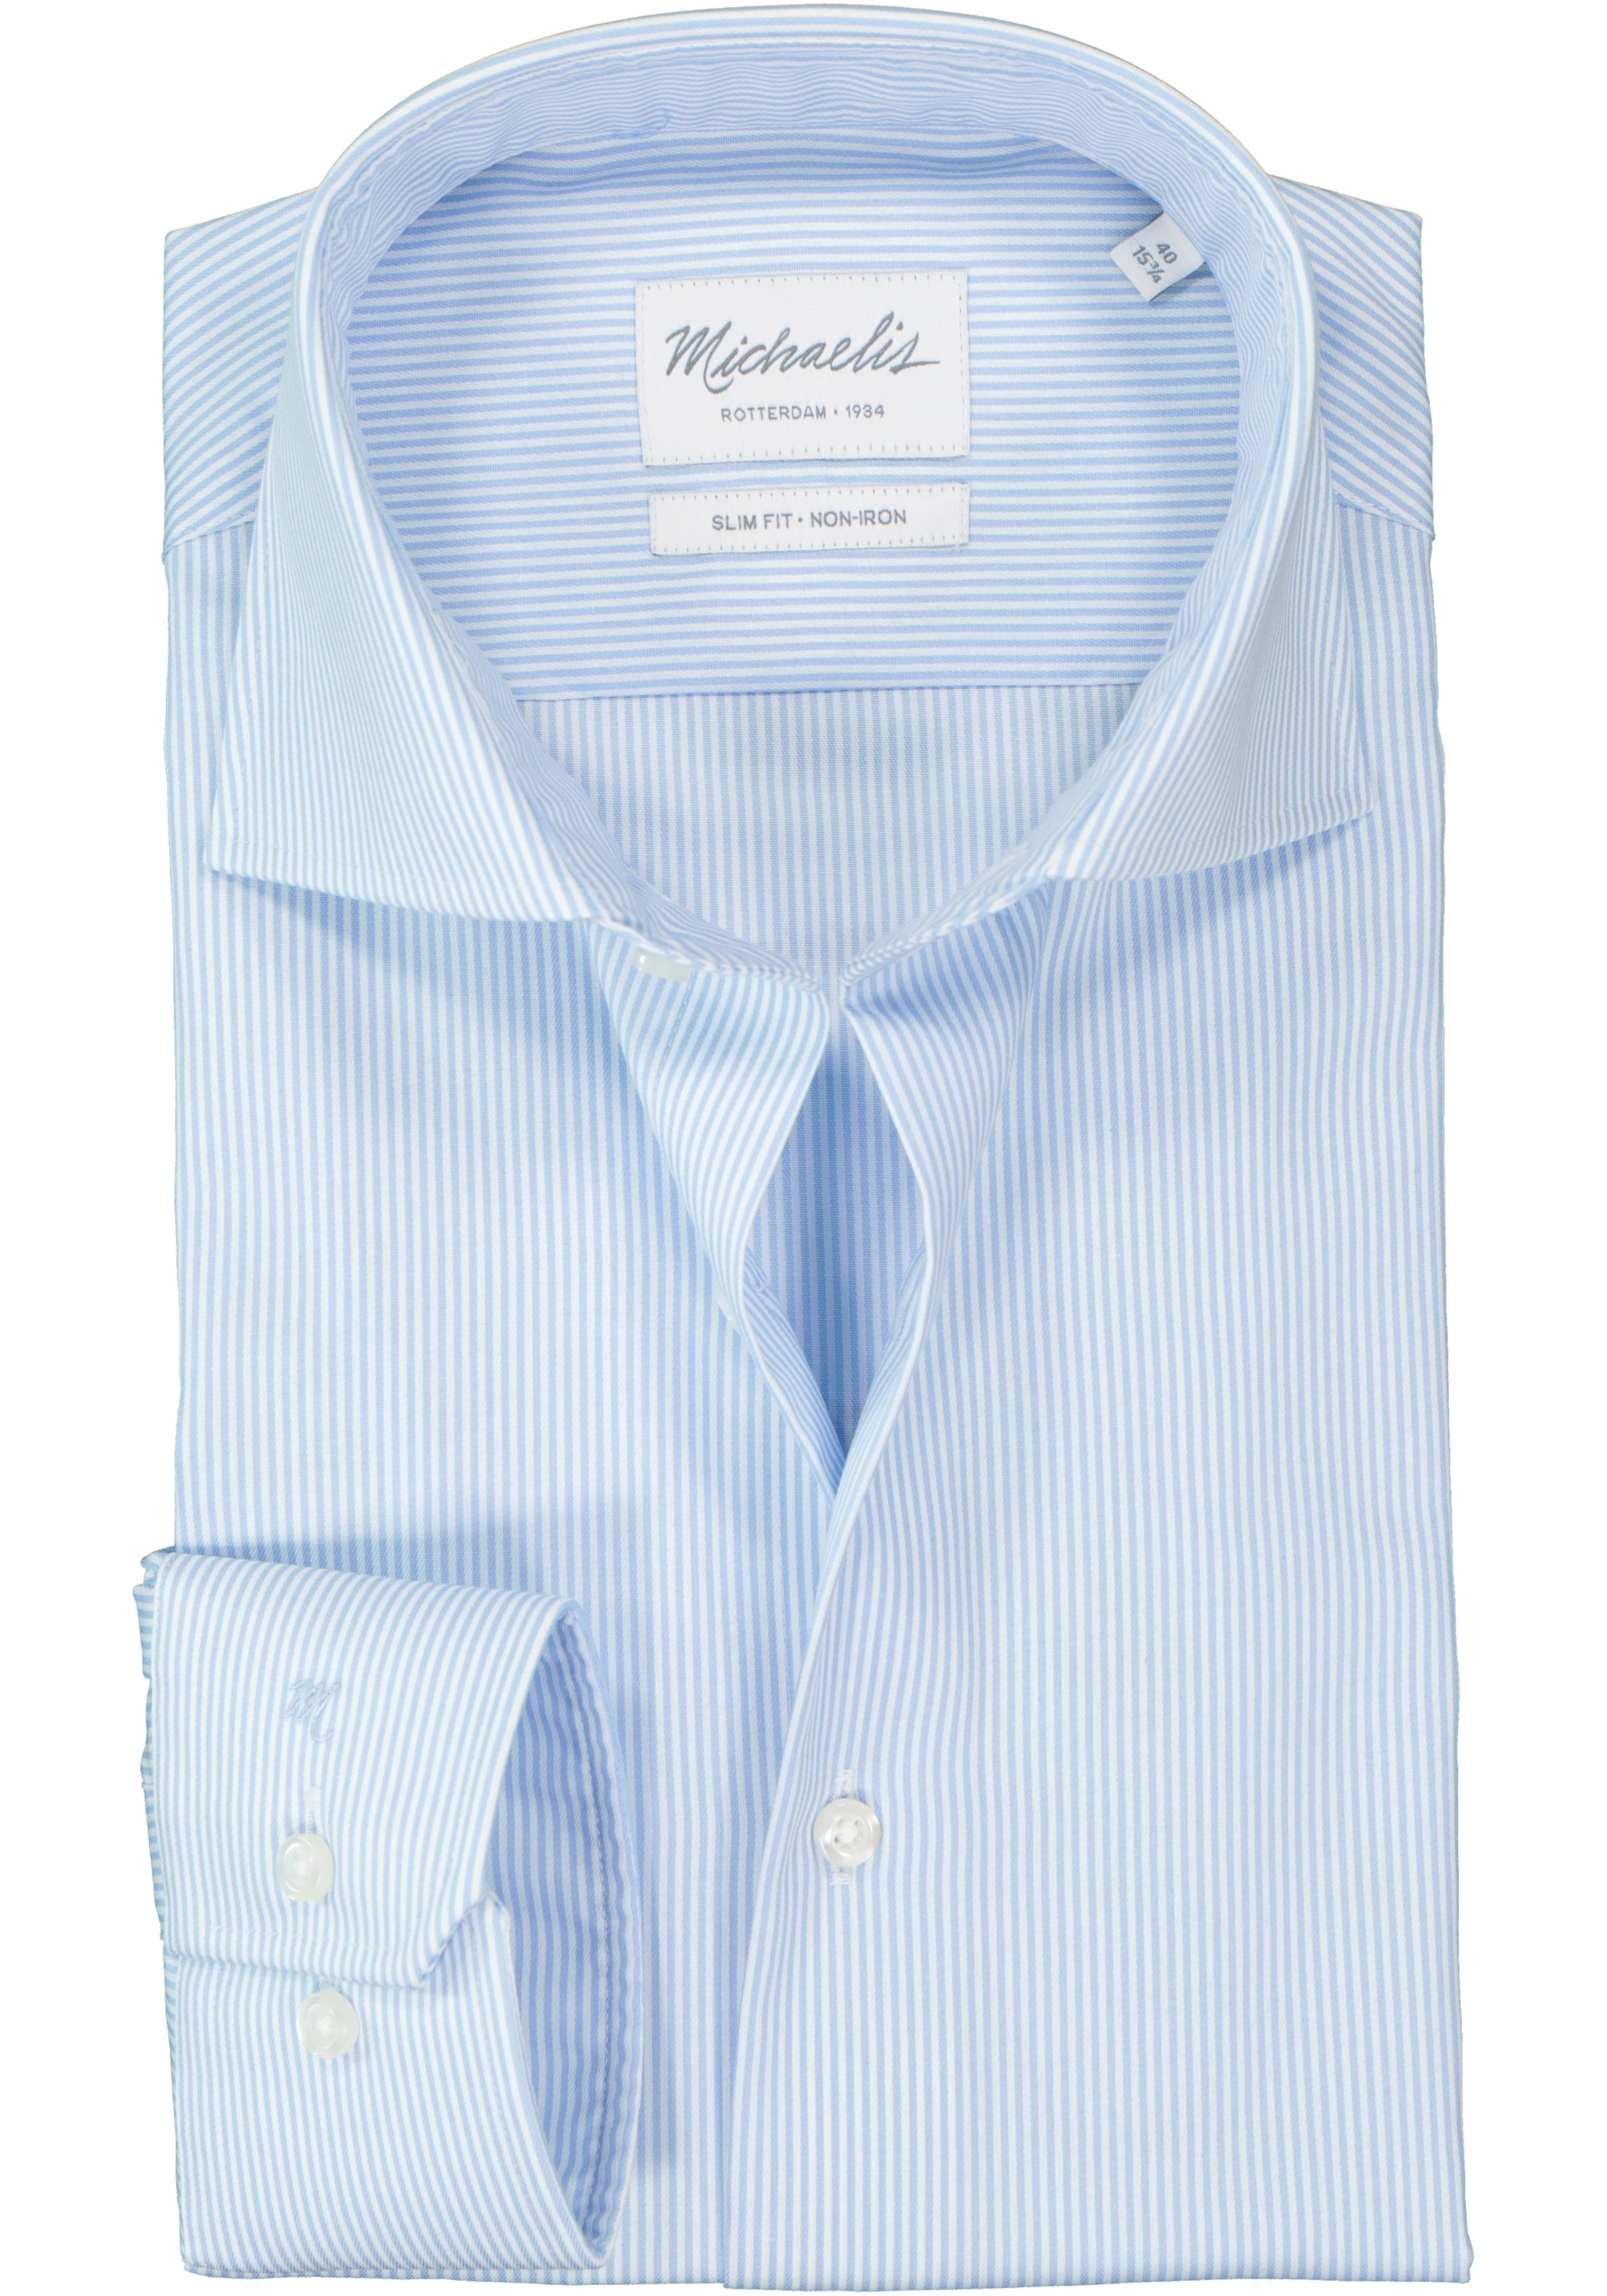 Garantie telex opschorten Michaelis Slim Fit overhemd, licht blauw gestreept - Gratis bezorgd